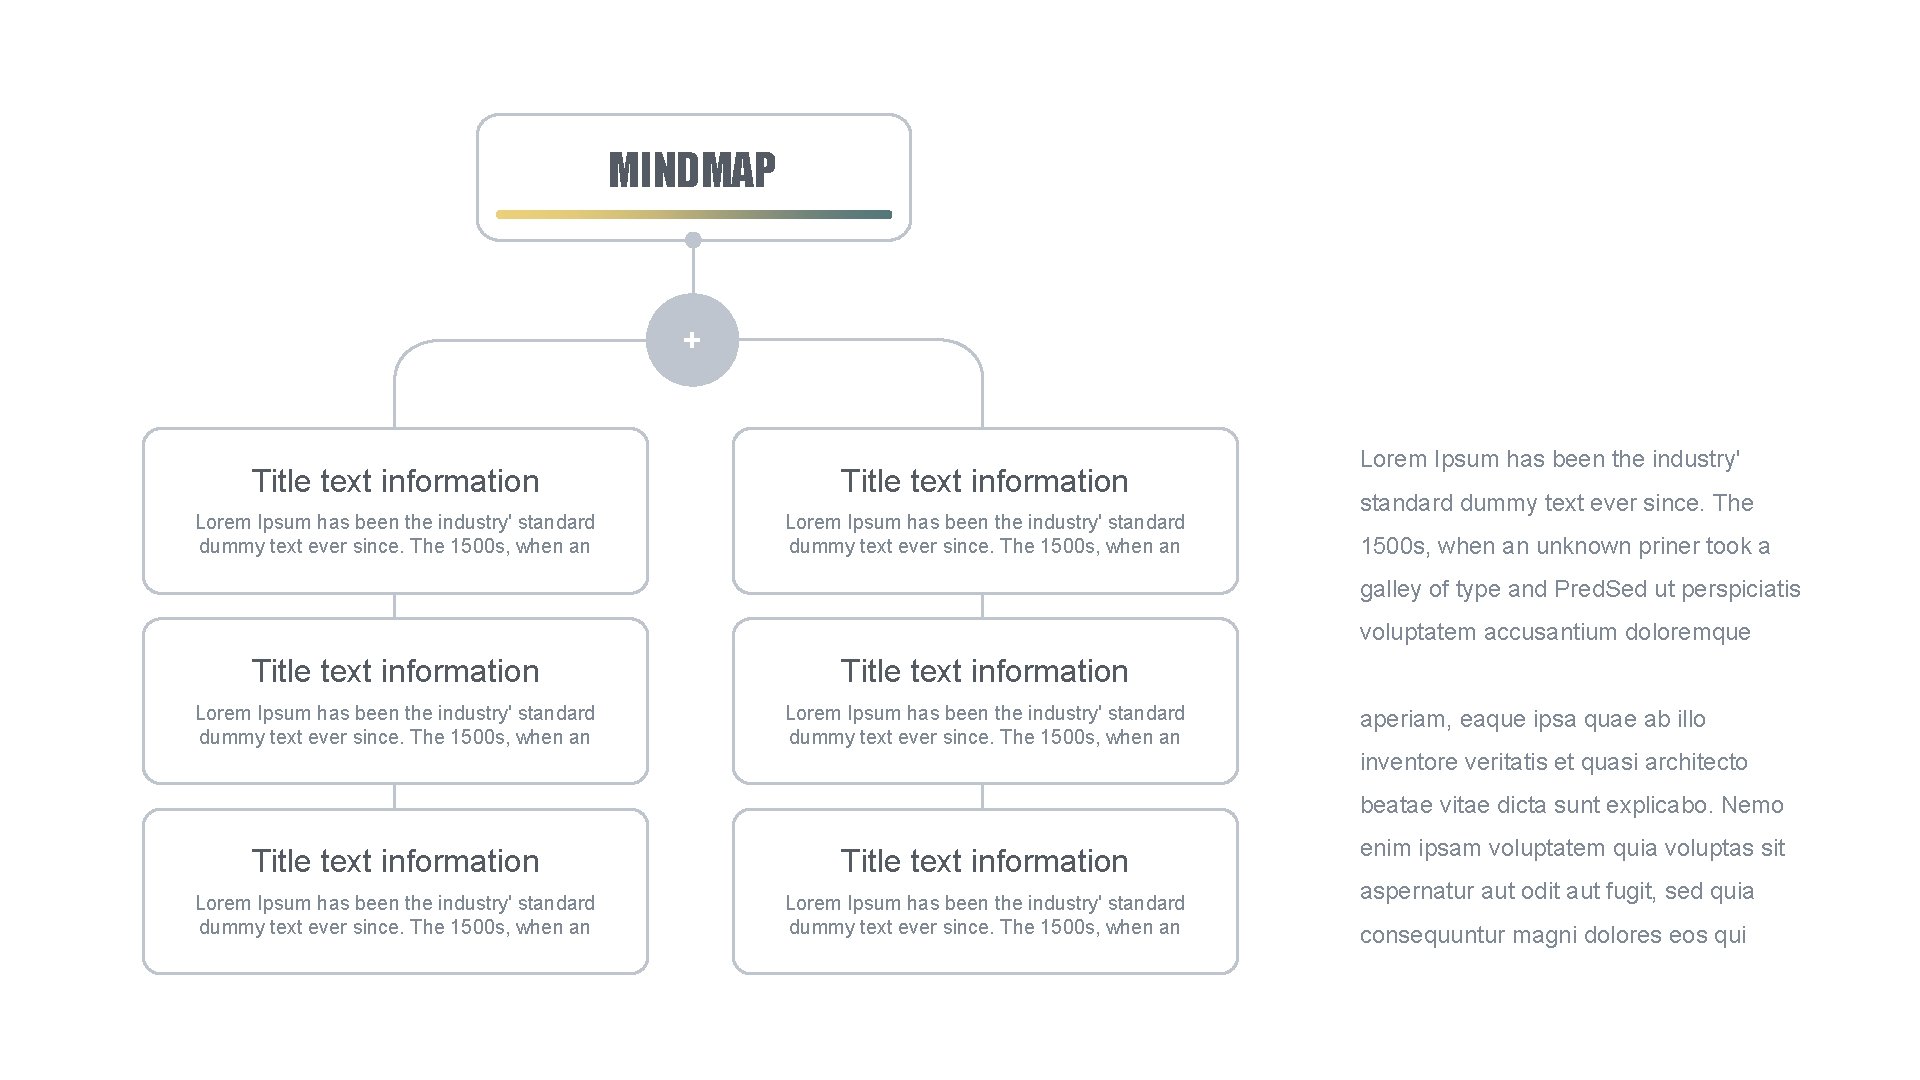 MINDMAP + Title text information Lorem Ipsum has been the industry' standard dummy text